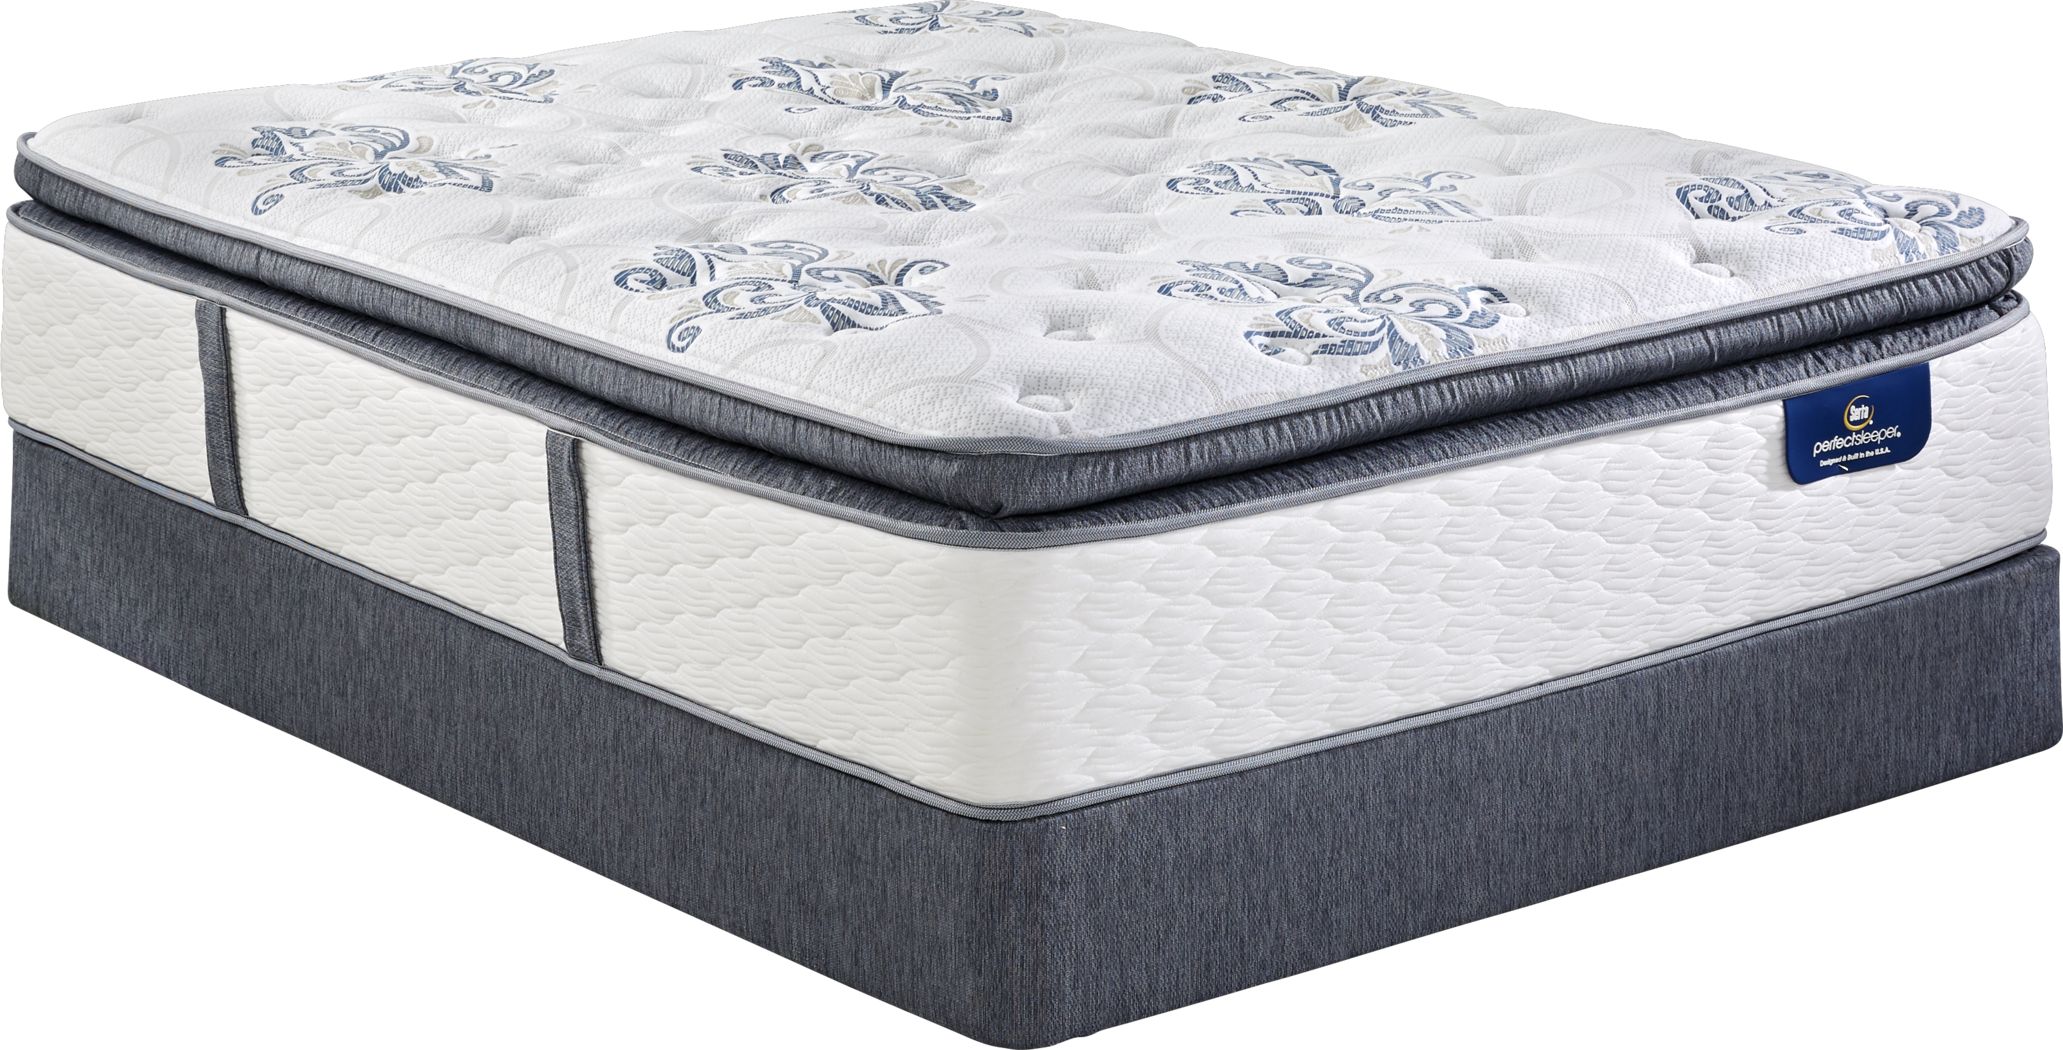 serta groomsby king size perfect sleeper mattress